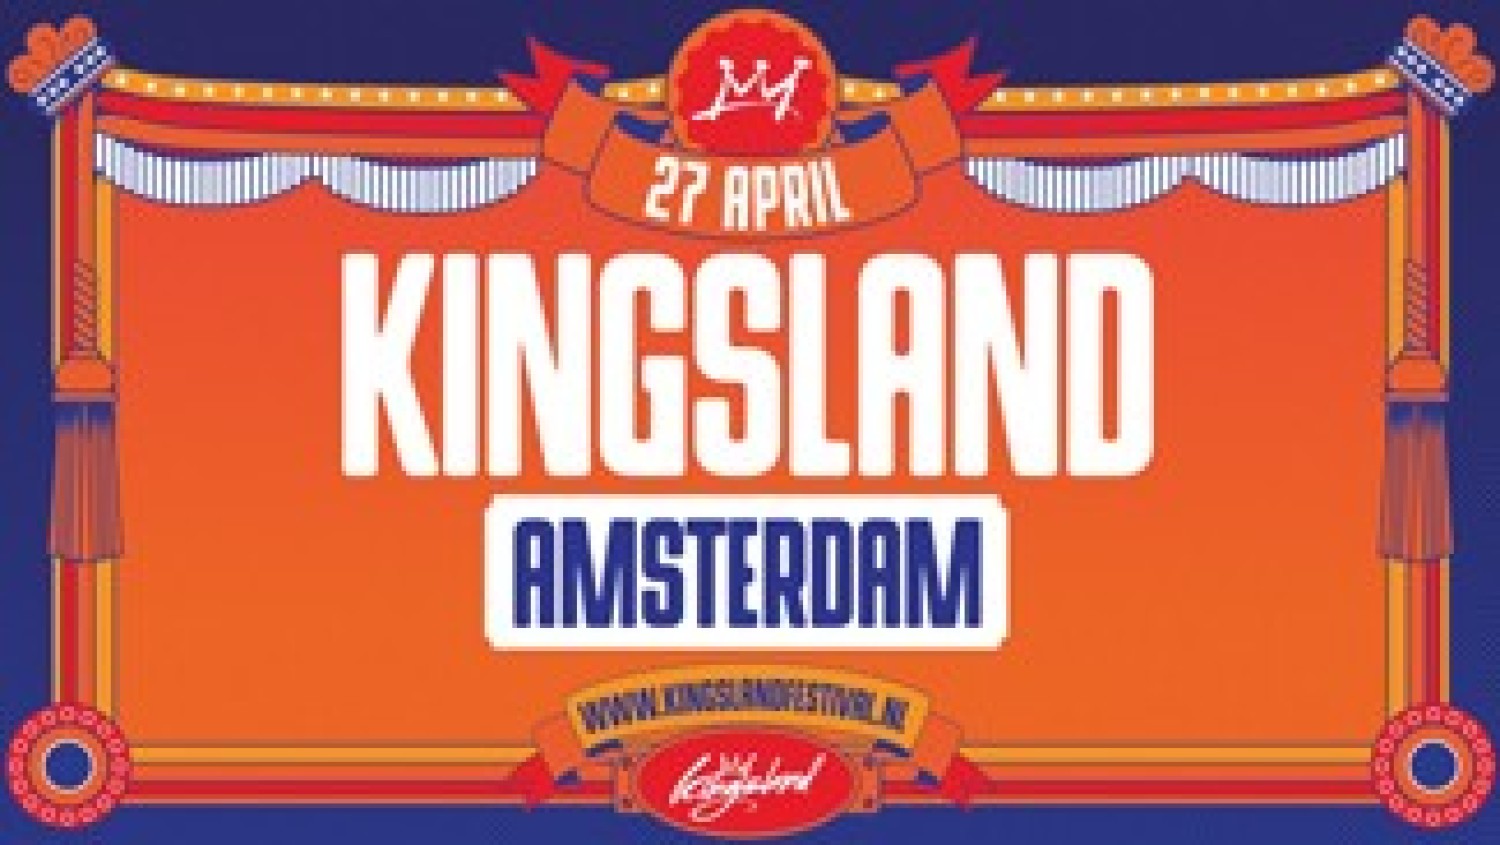 Party report: Kingsland Festival Amsterdam, Amsterdam (27-04-2018)